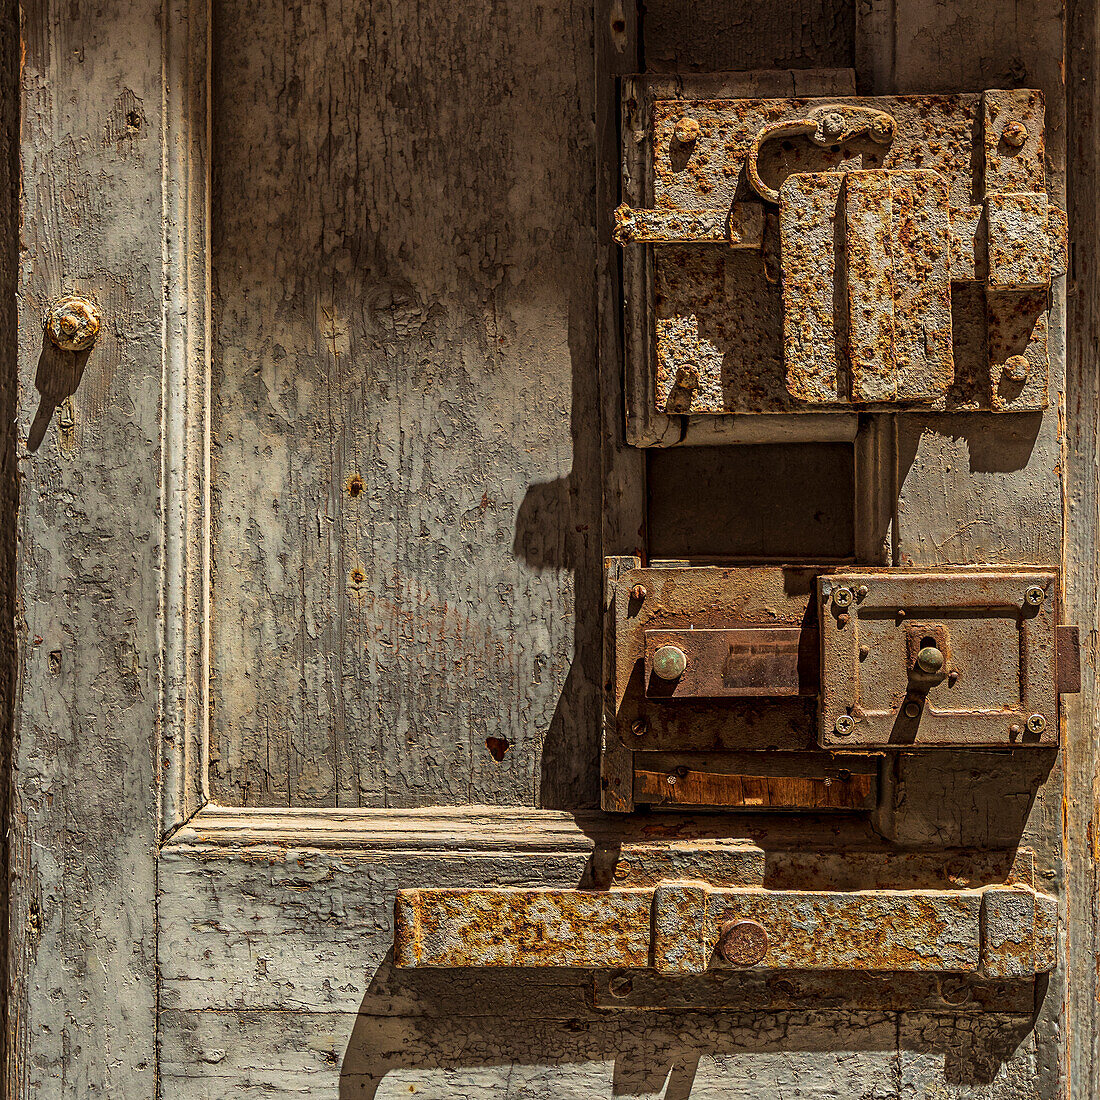 Italy, Apulia, Metropolitan City of Bari, Giovinazzo. Old wooden door with massive rusted metal locks.